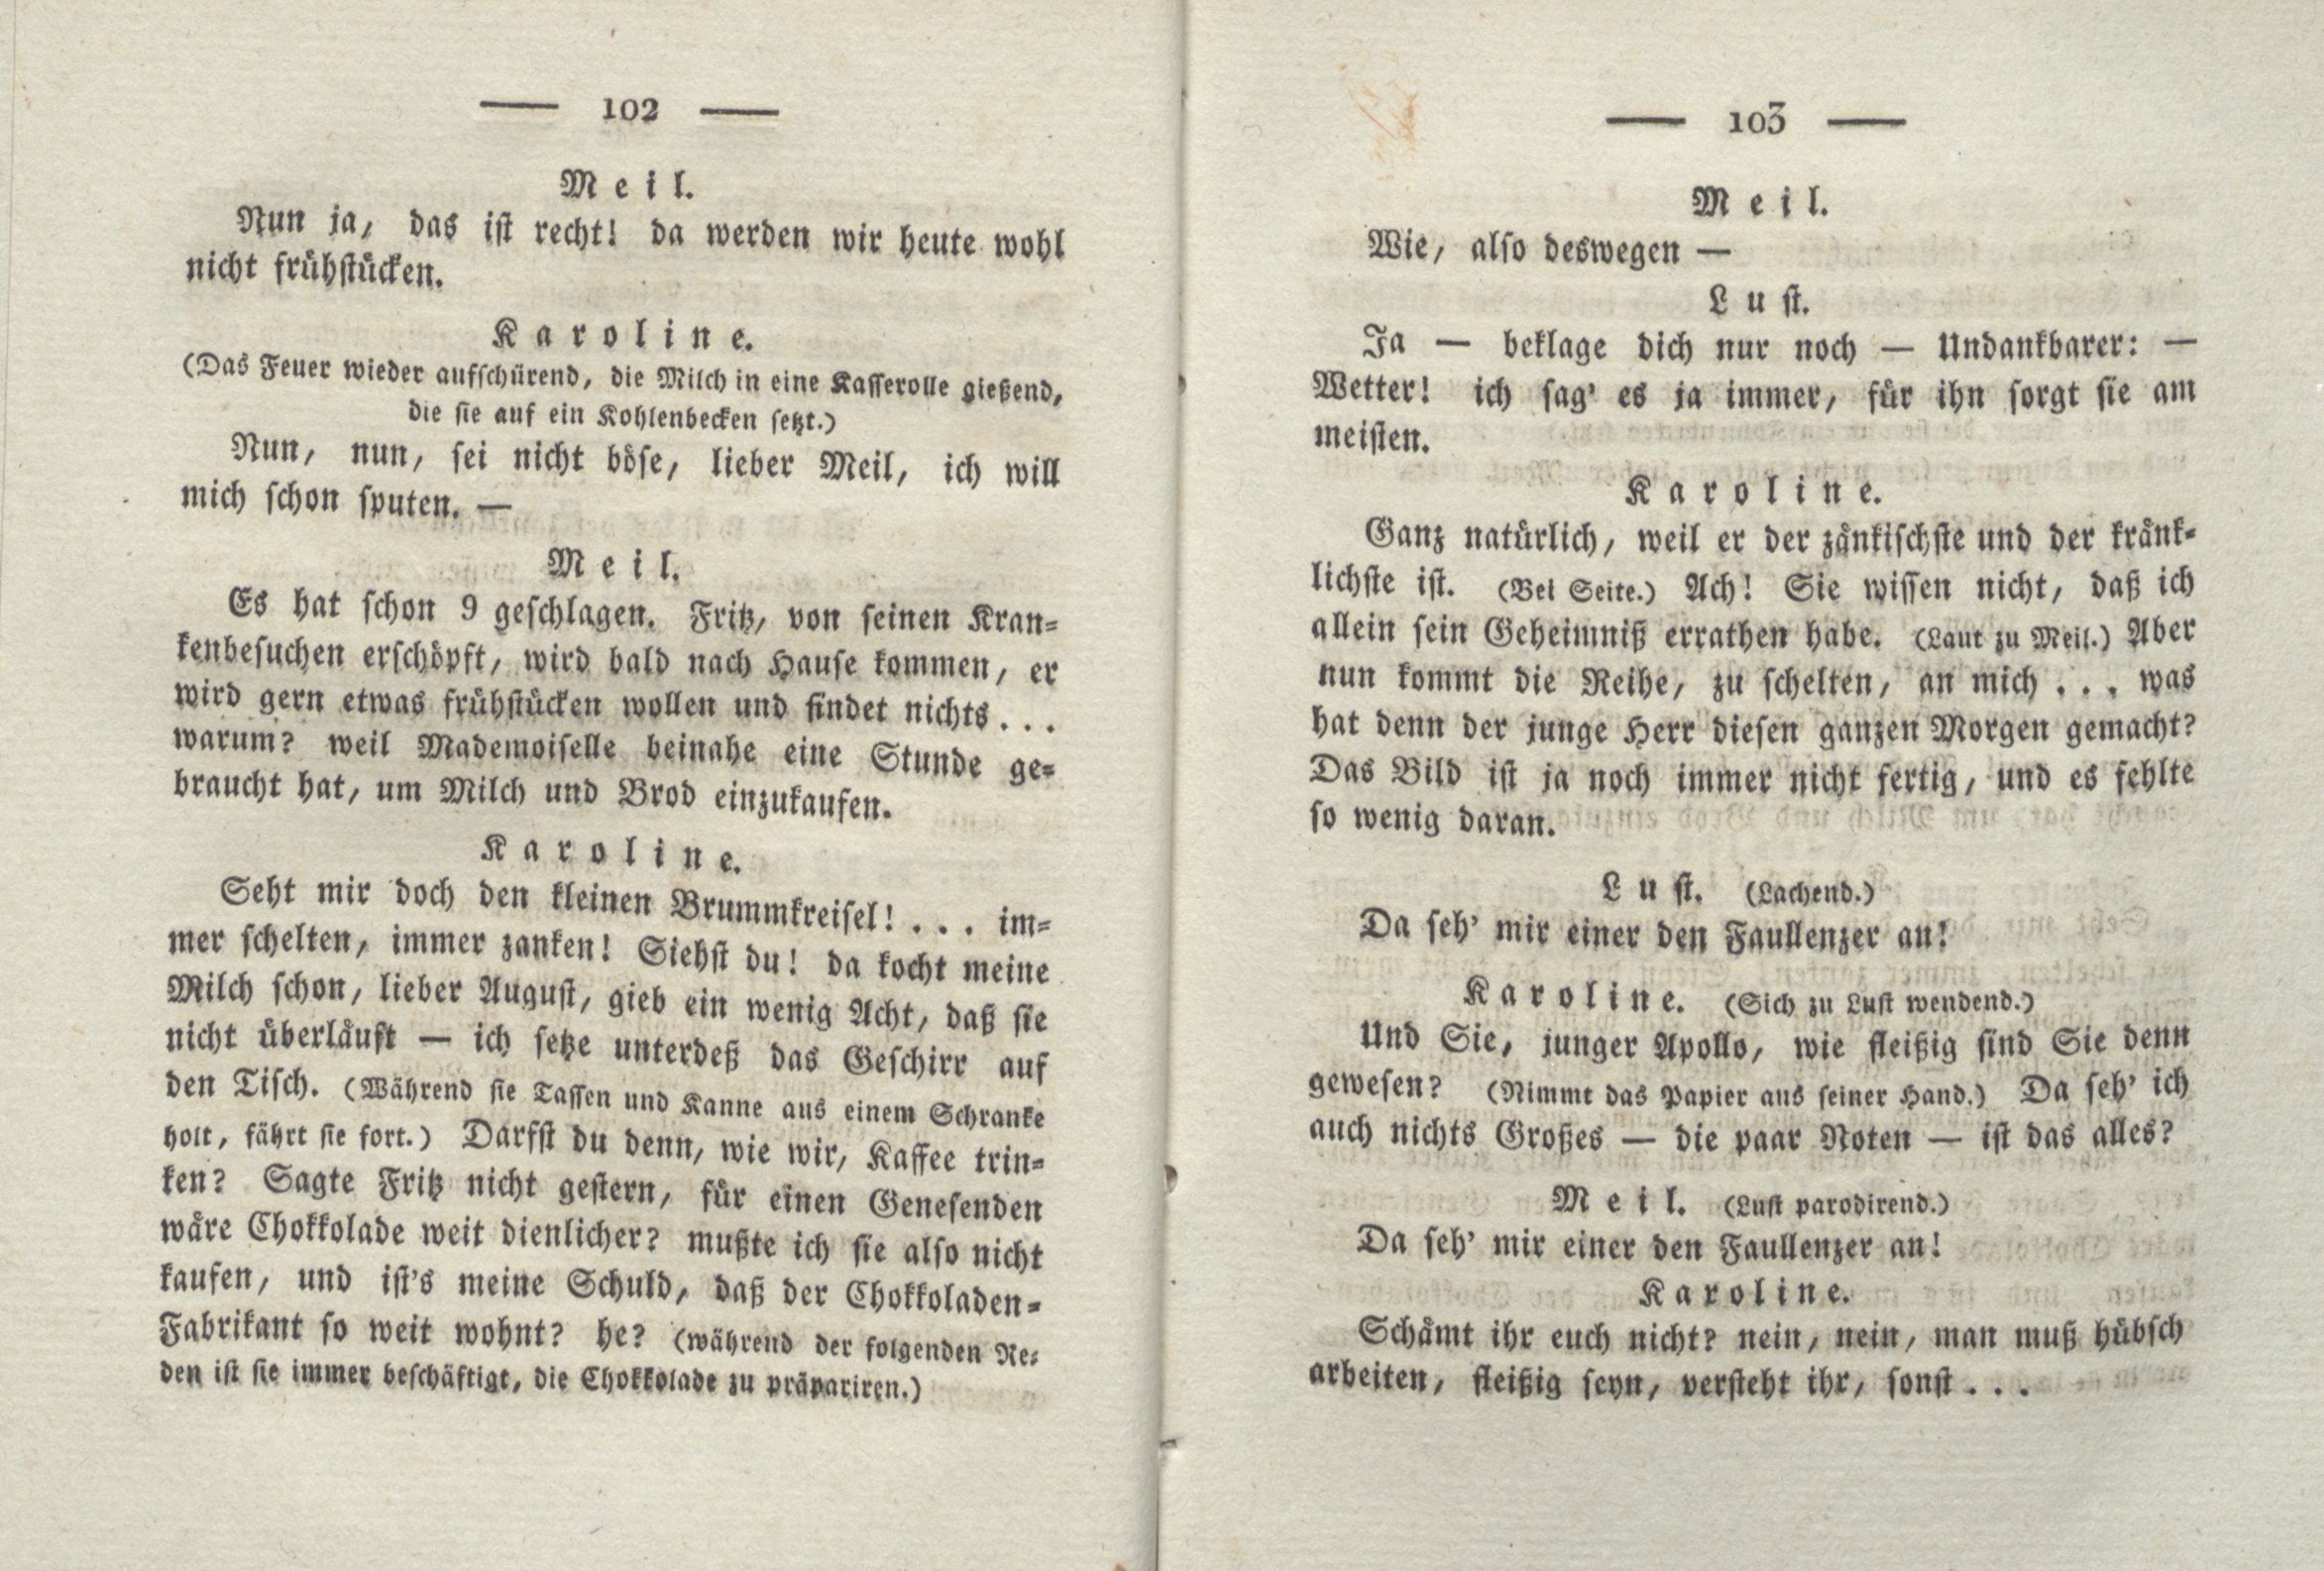 Caritas [1] (1825) | 56. (102-103) Main body of text